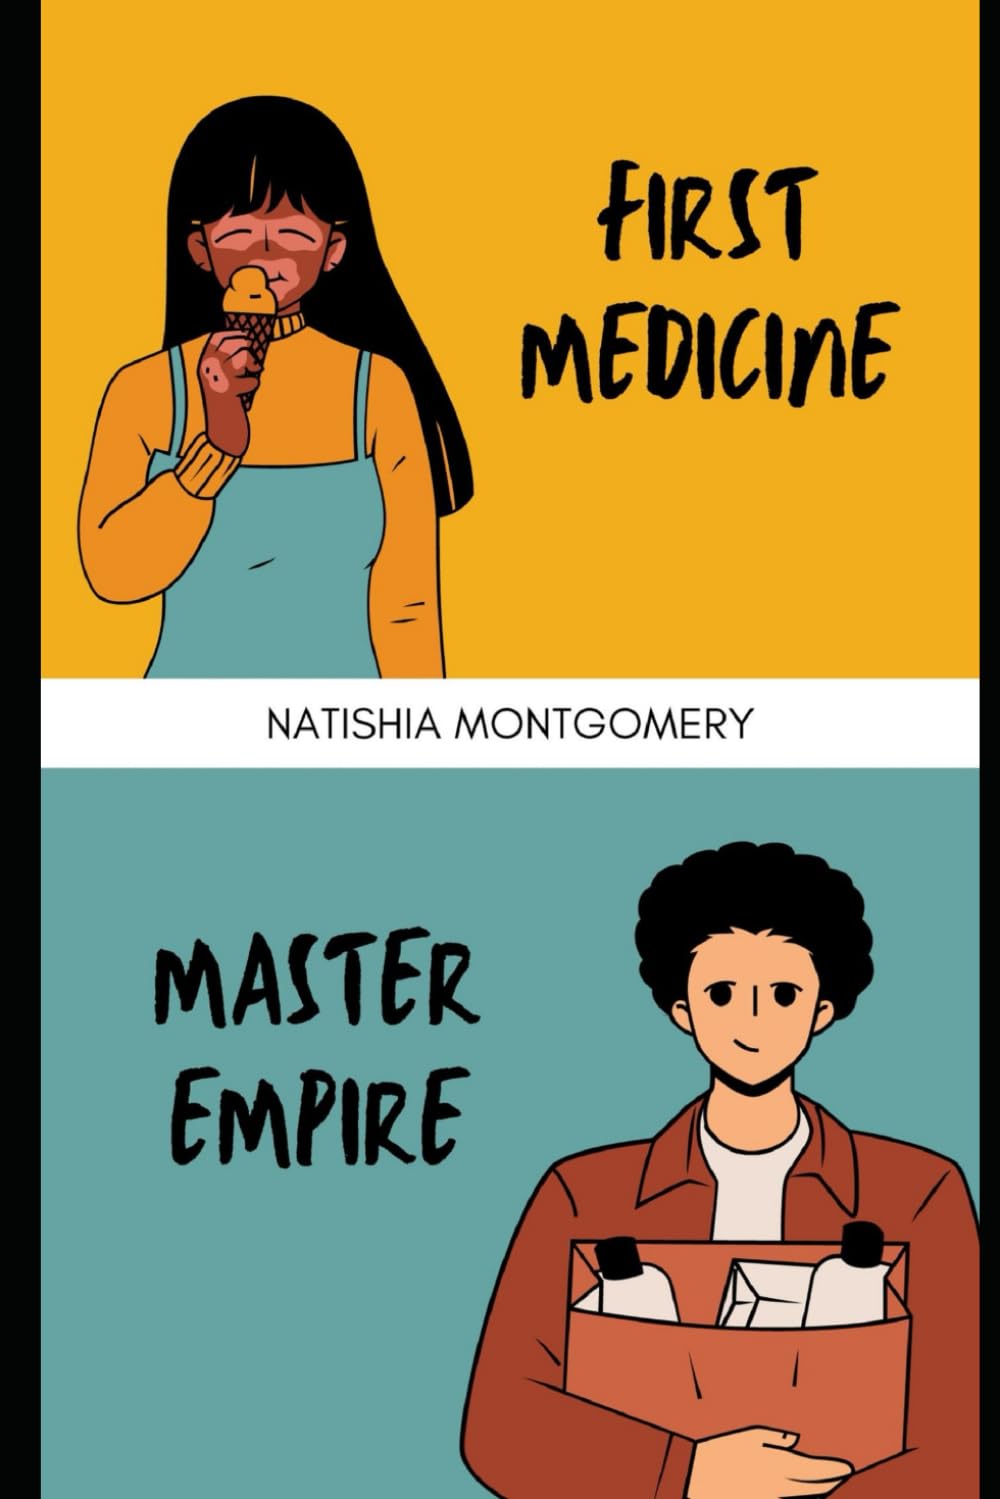 First Medicine Master Empire